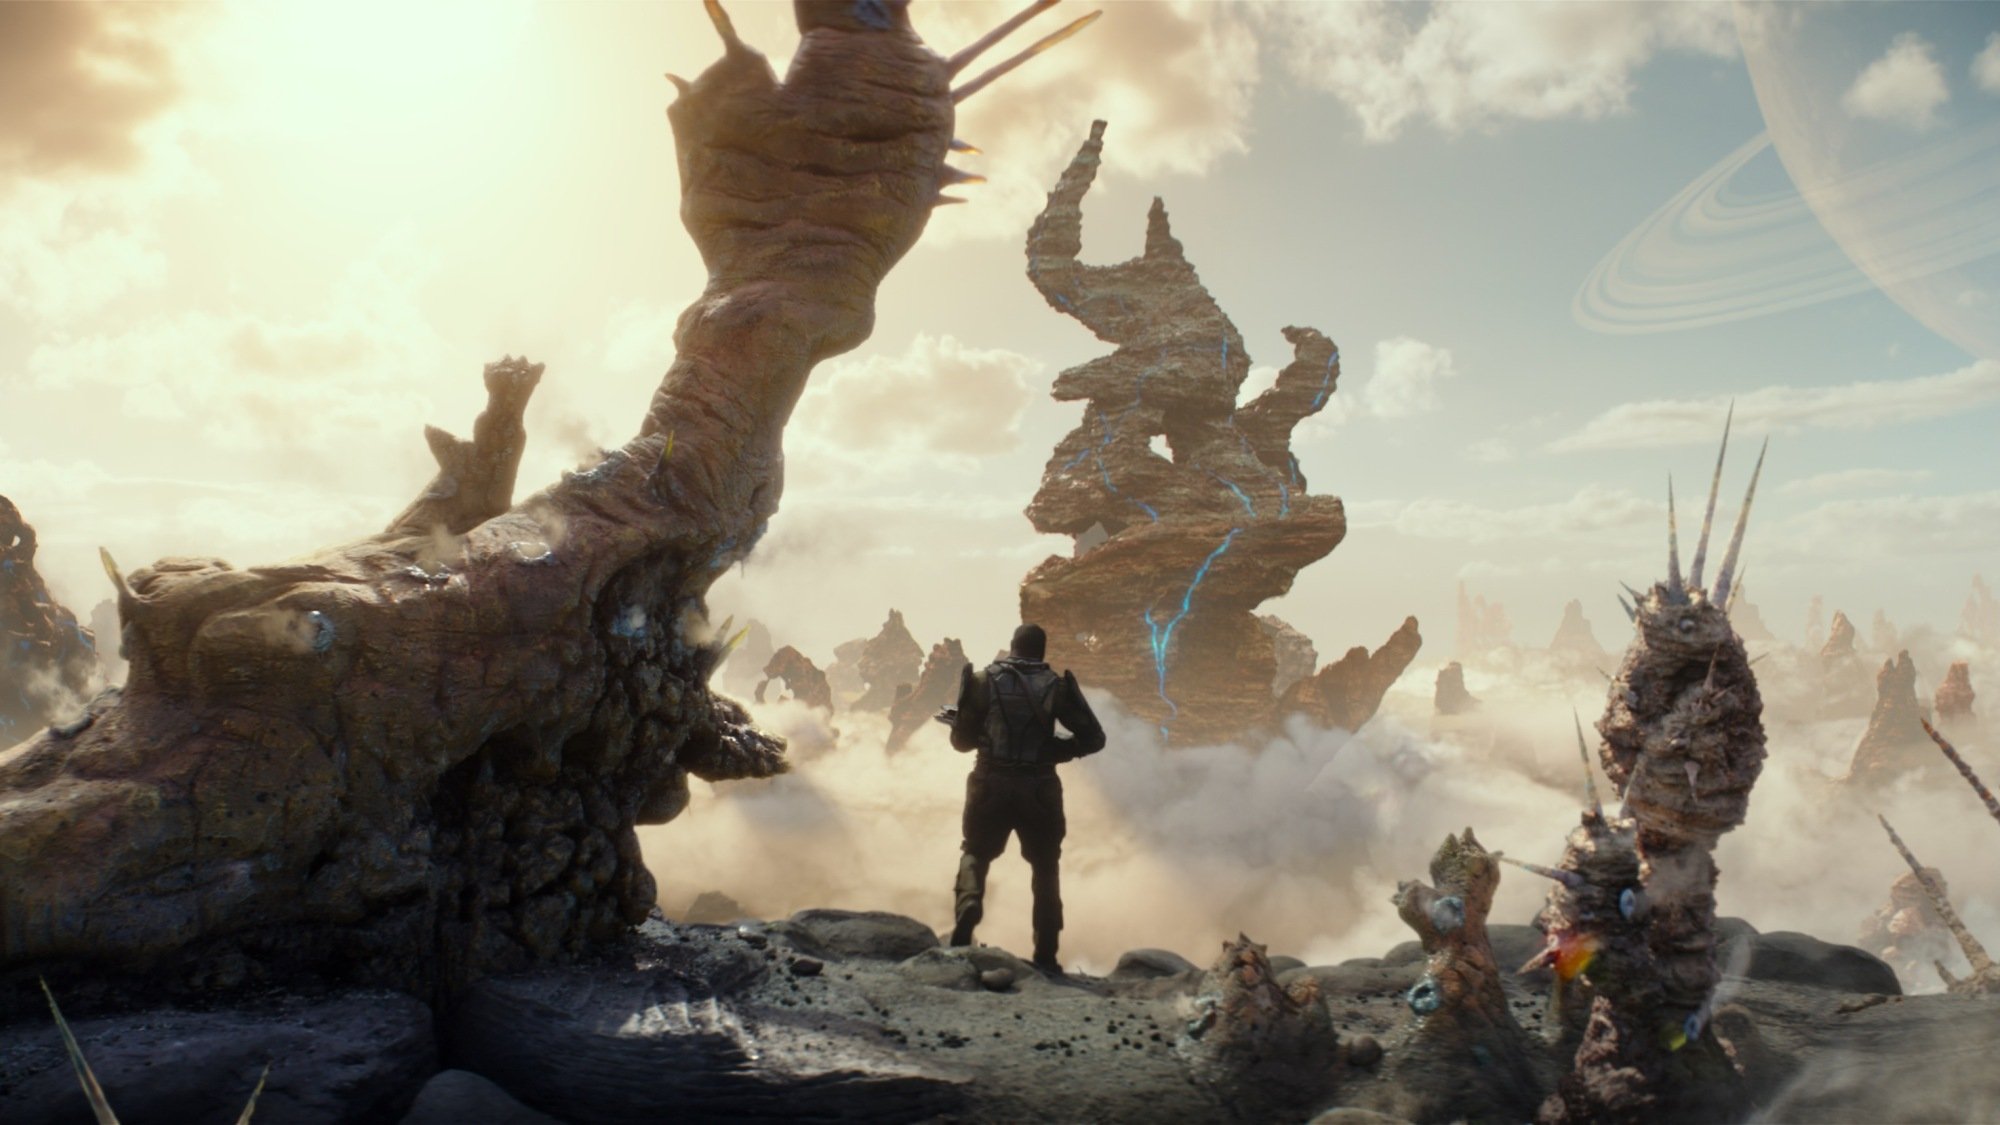 Une image du film "Atlas".